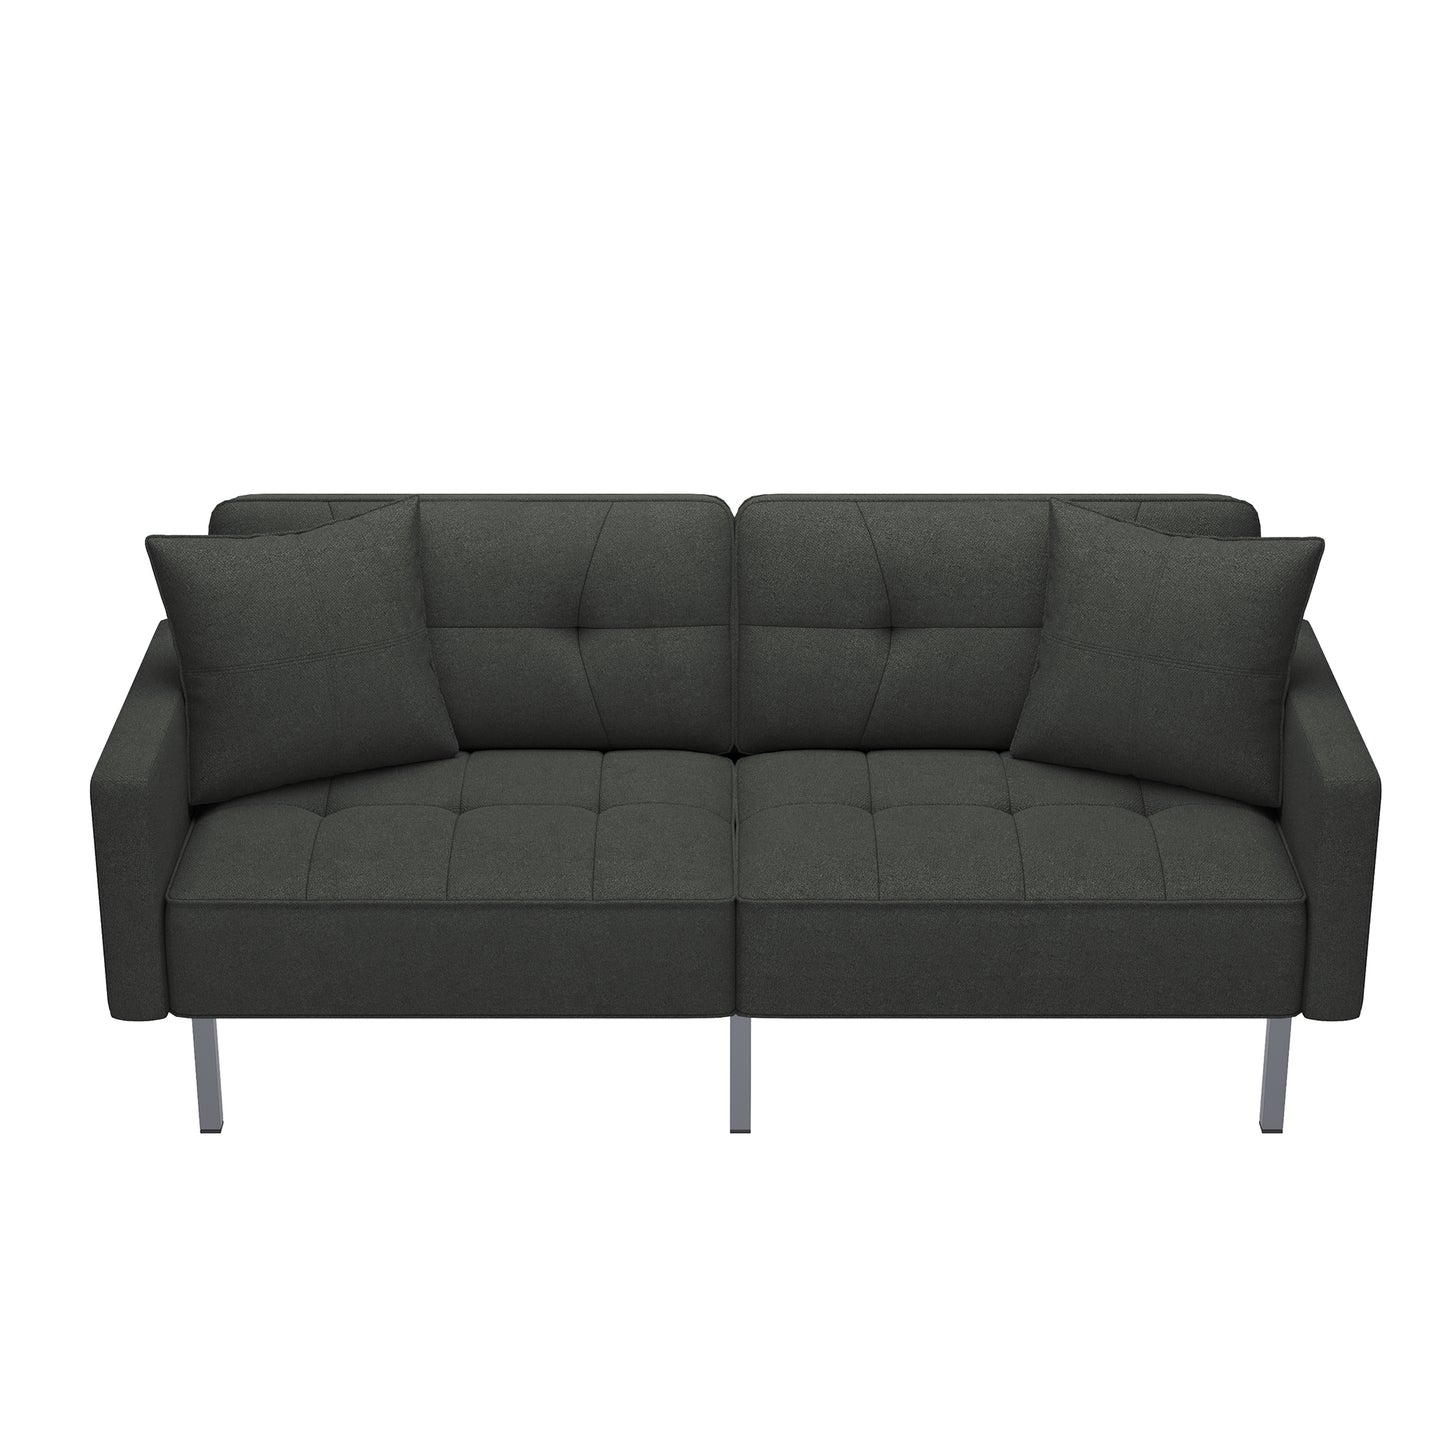 Oris Linen Upholstered Modern Convertible Sofa Bed